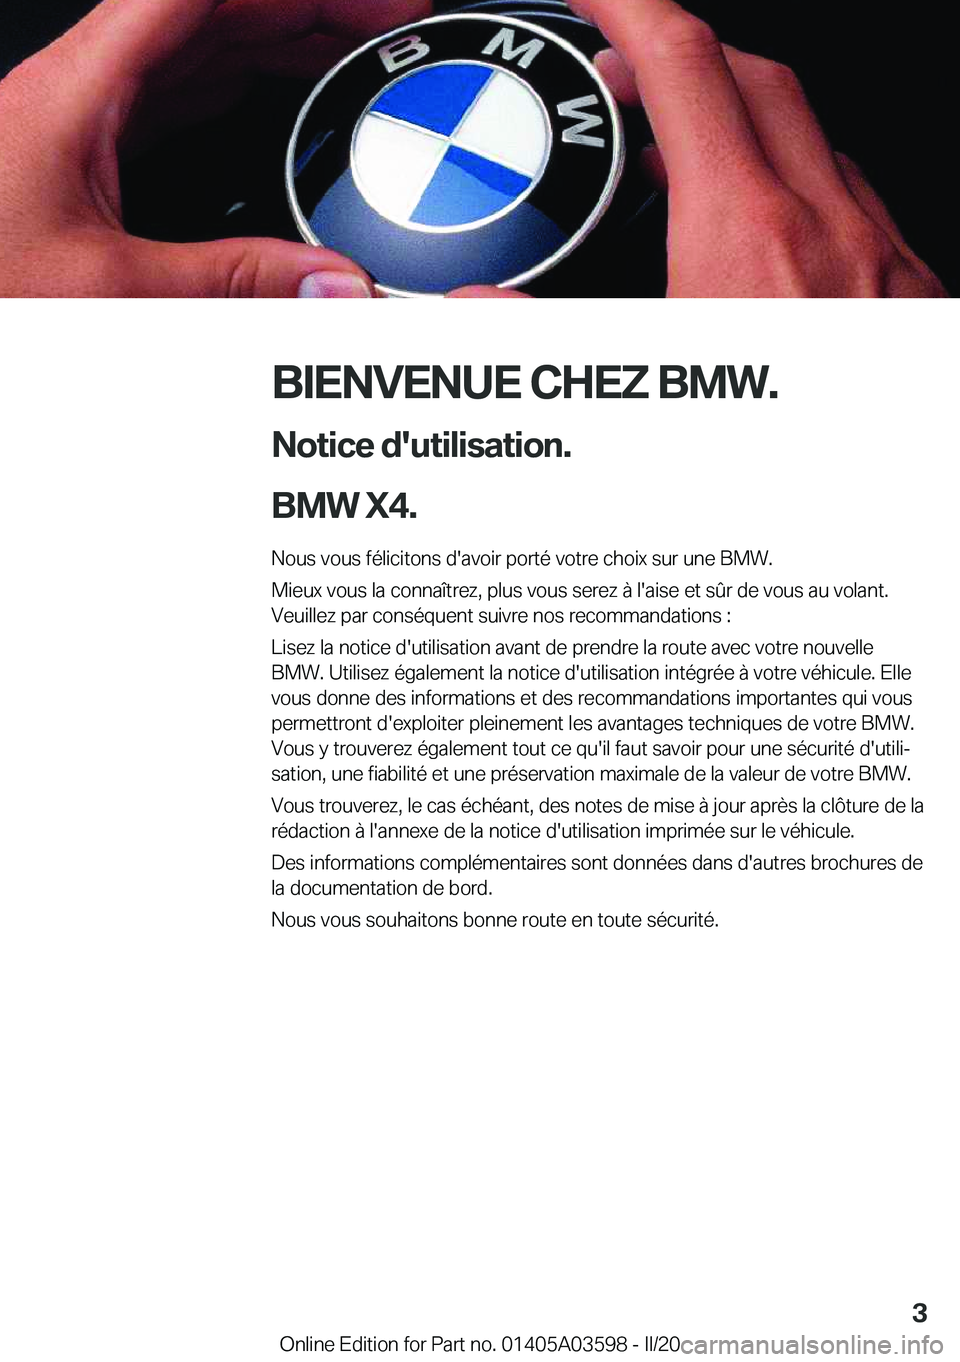 BMW X4 2020  Notices Demploi (in French) �B�I�E�N�V�E�N�U�E��C�H�E�Z��B�M�W�.�N�o�t�i�c�e��d�'�u�t�i�l�i�s�a�t�i�o�n�.
�B�M�W��X�4�. �N�o�u�s��v�o�u�s��f�é�l�i�c�i�t�o�n�s��d�'�a�v�o�i�r��p�o�r�t�é��v�o�t�r�e��c�h�o�i�x�